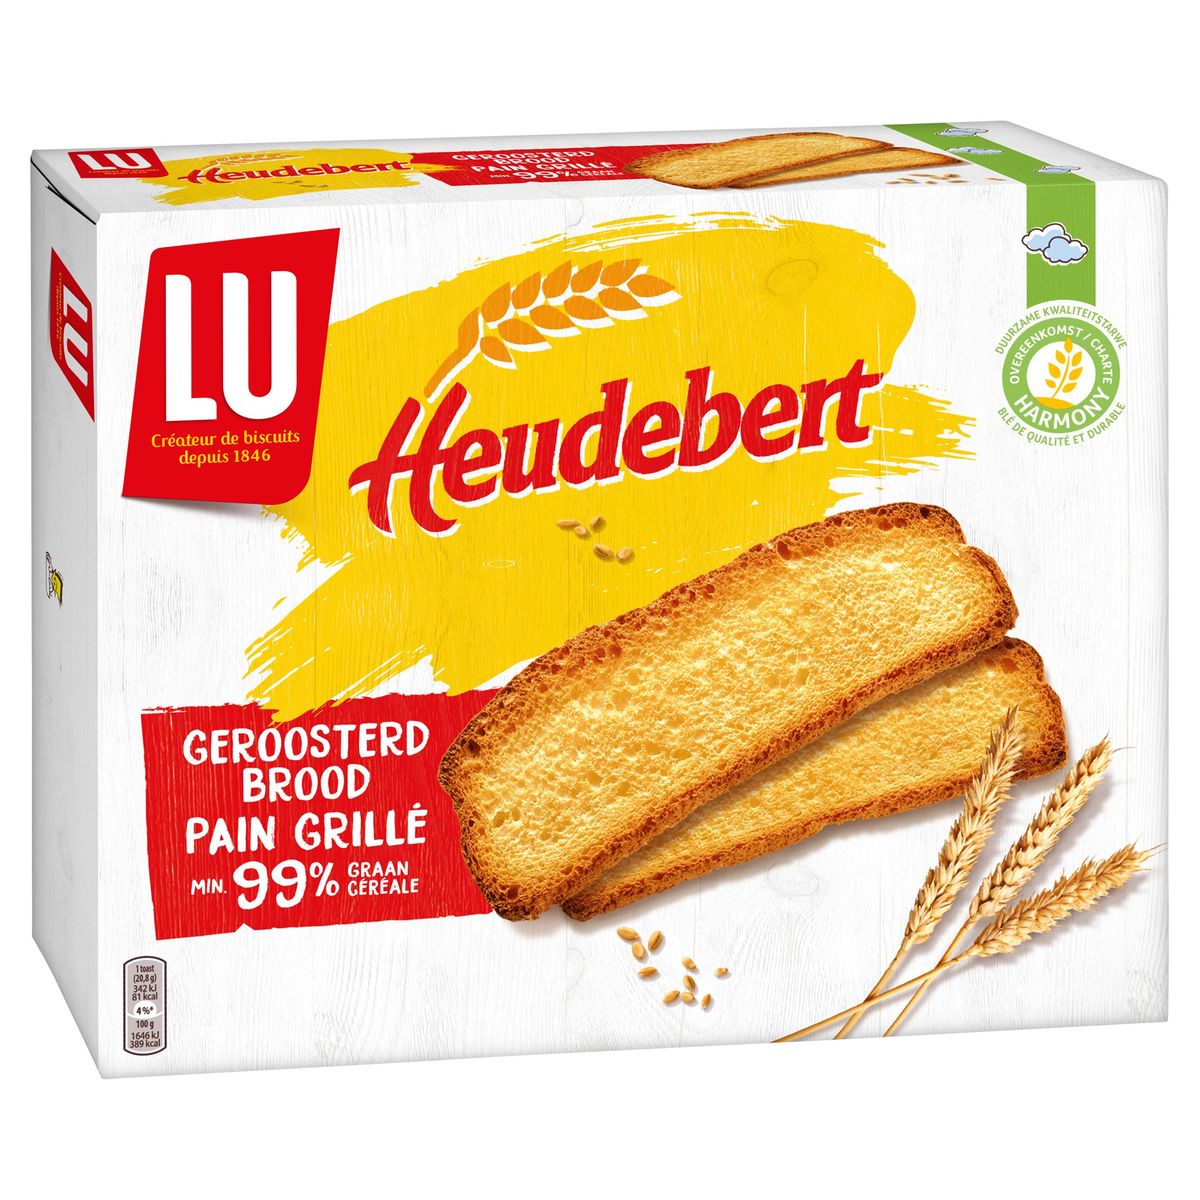 LU Heudebert Toast Geroosterd Brood 500 g